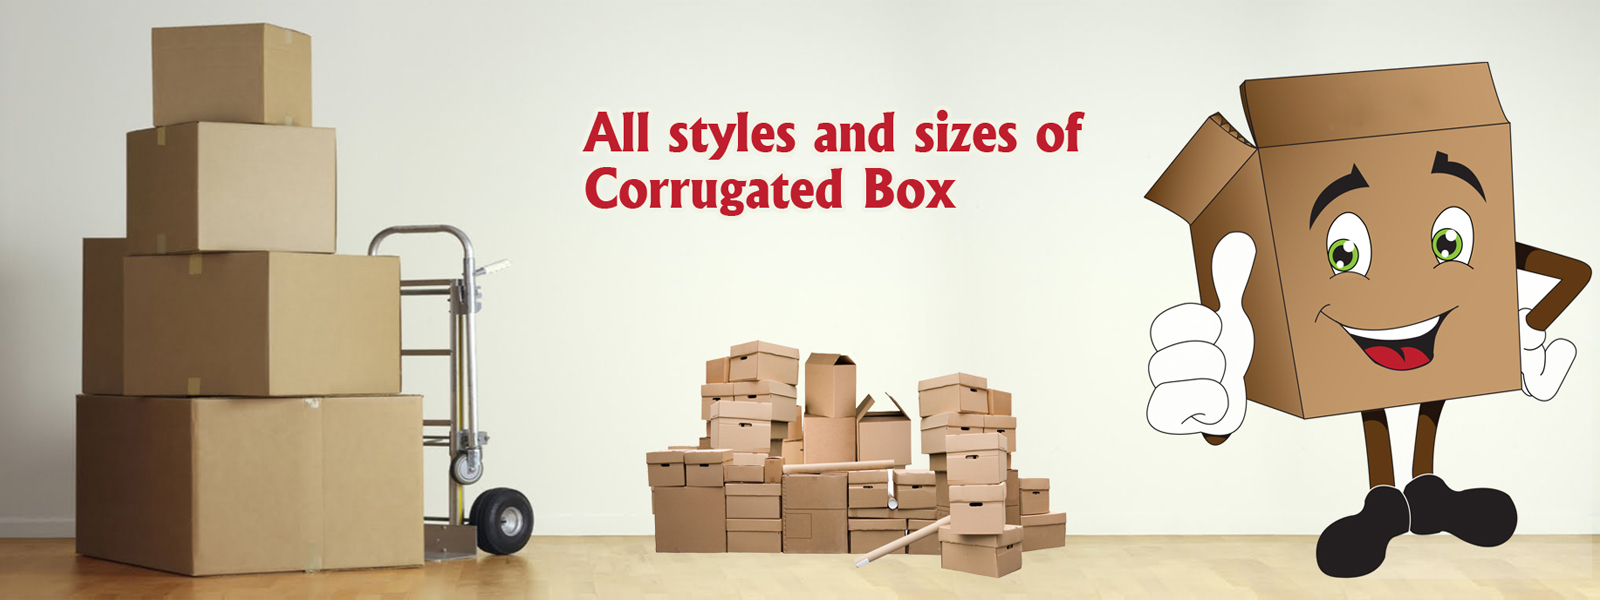 Corrugated box manufacturer and supplier in dubai